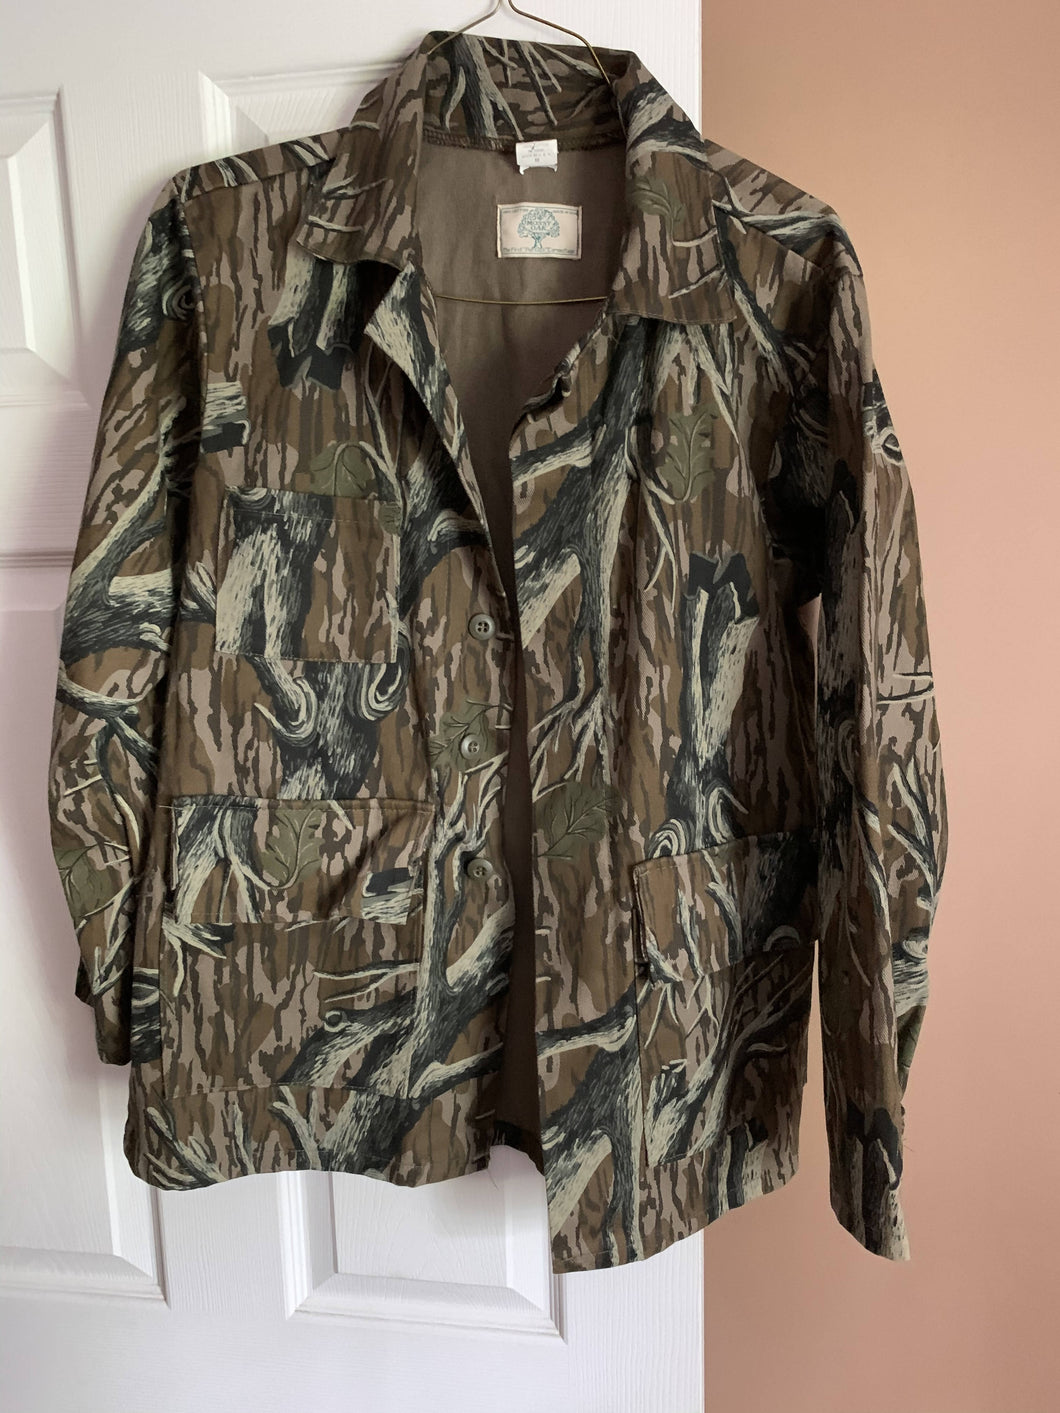 Mossy oak 3 pocket jacket (M)